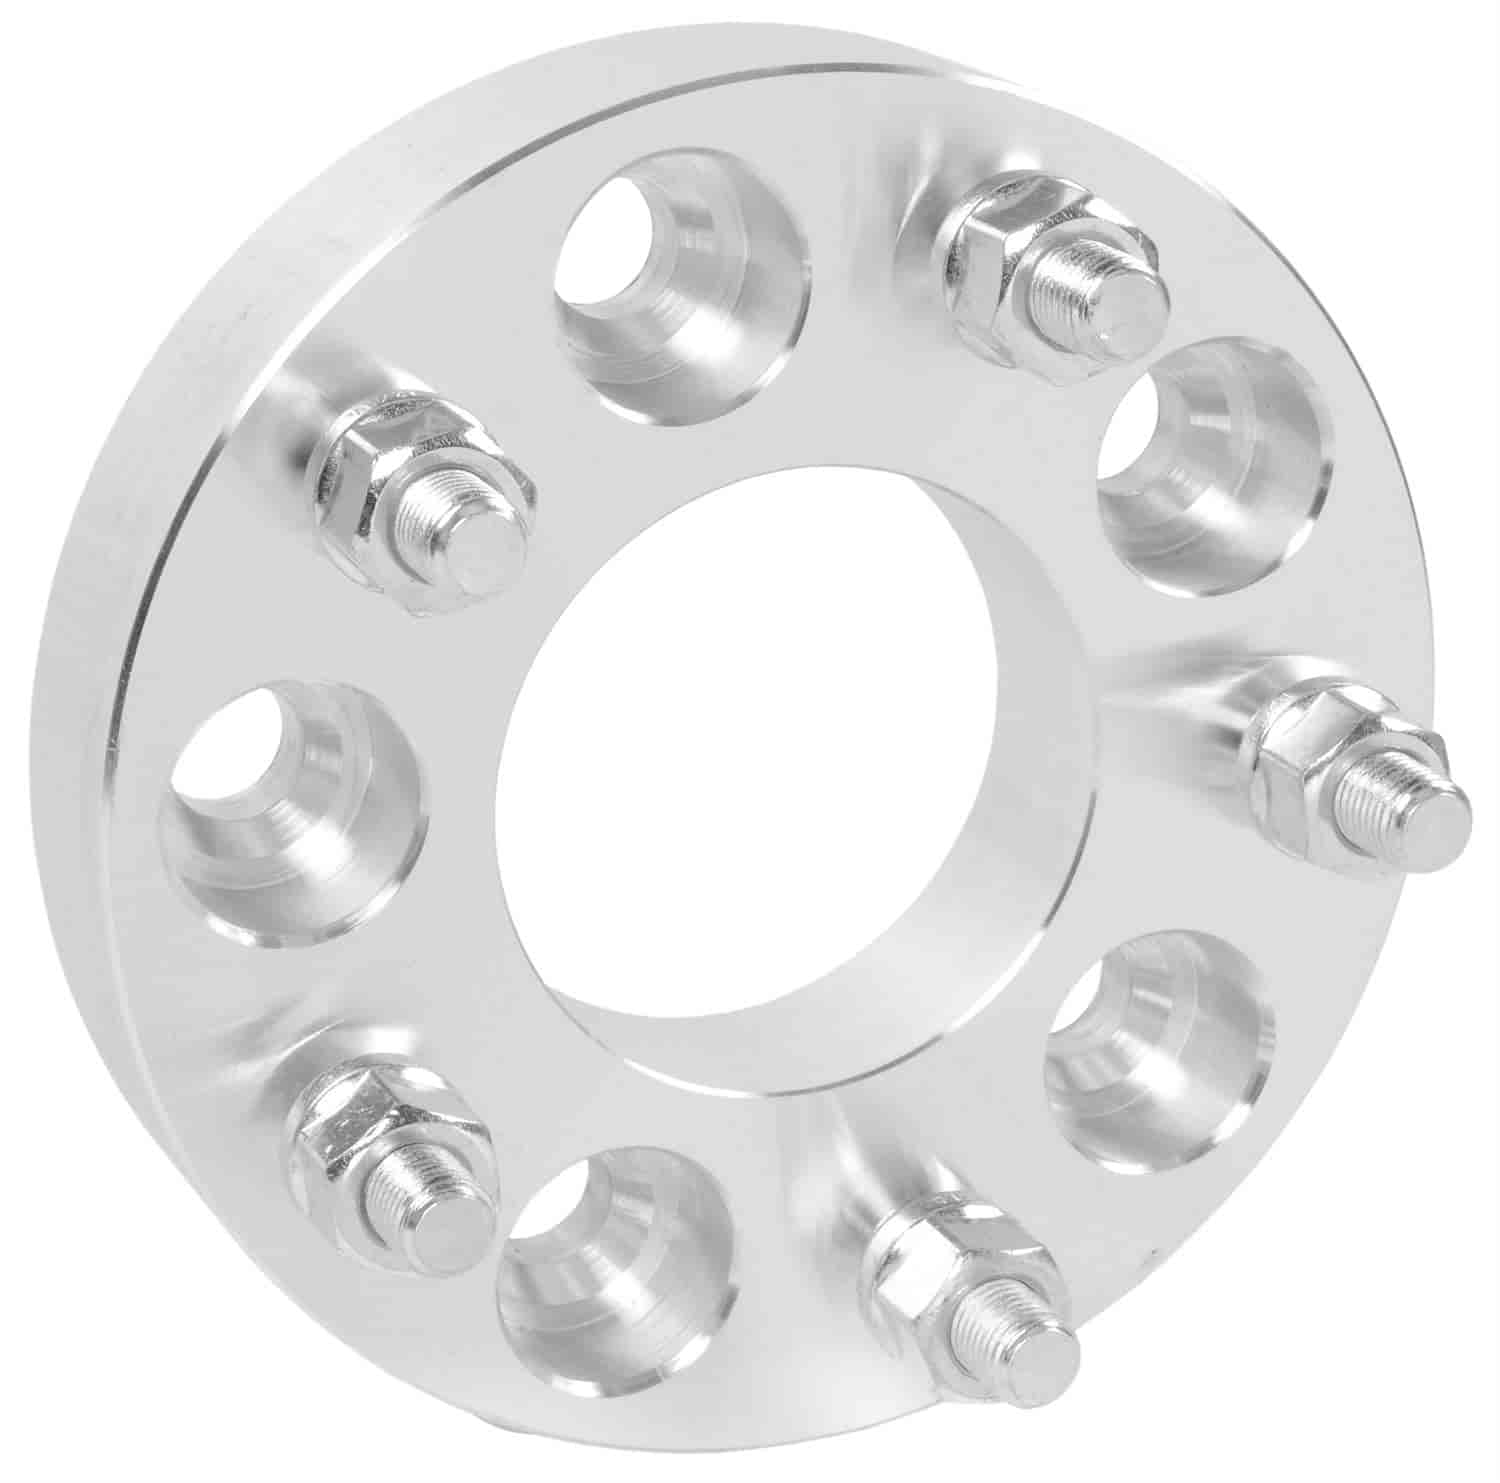 Billet Aluminum Wheel Adapter [Adapts 5 x 4.75" Hub to 5 x 5" Wheel] 1.25" Thick